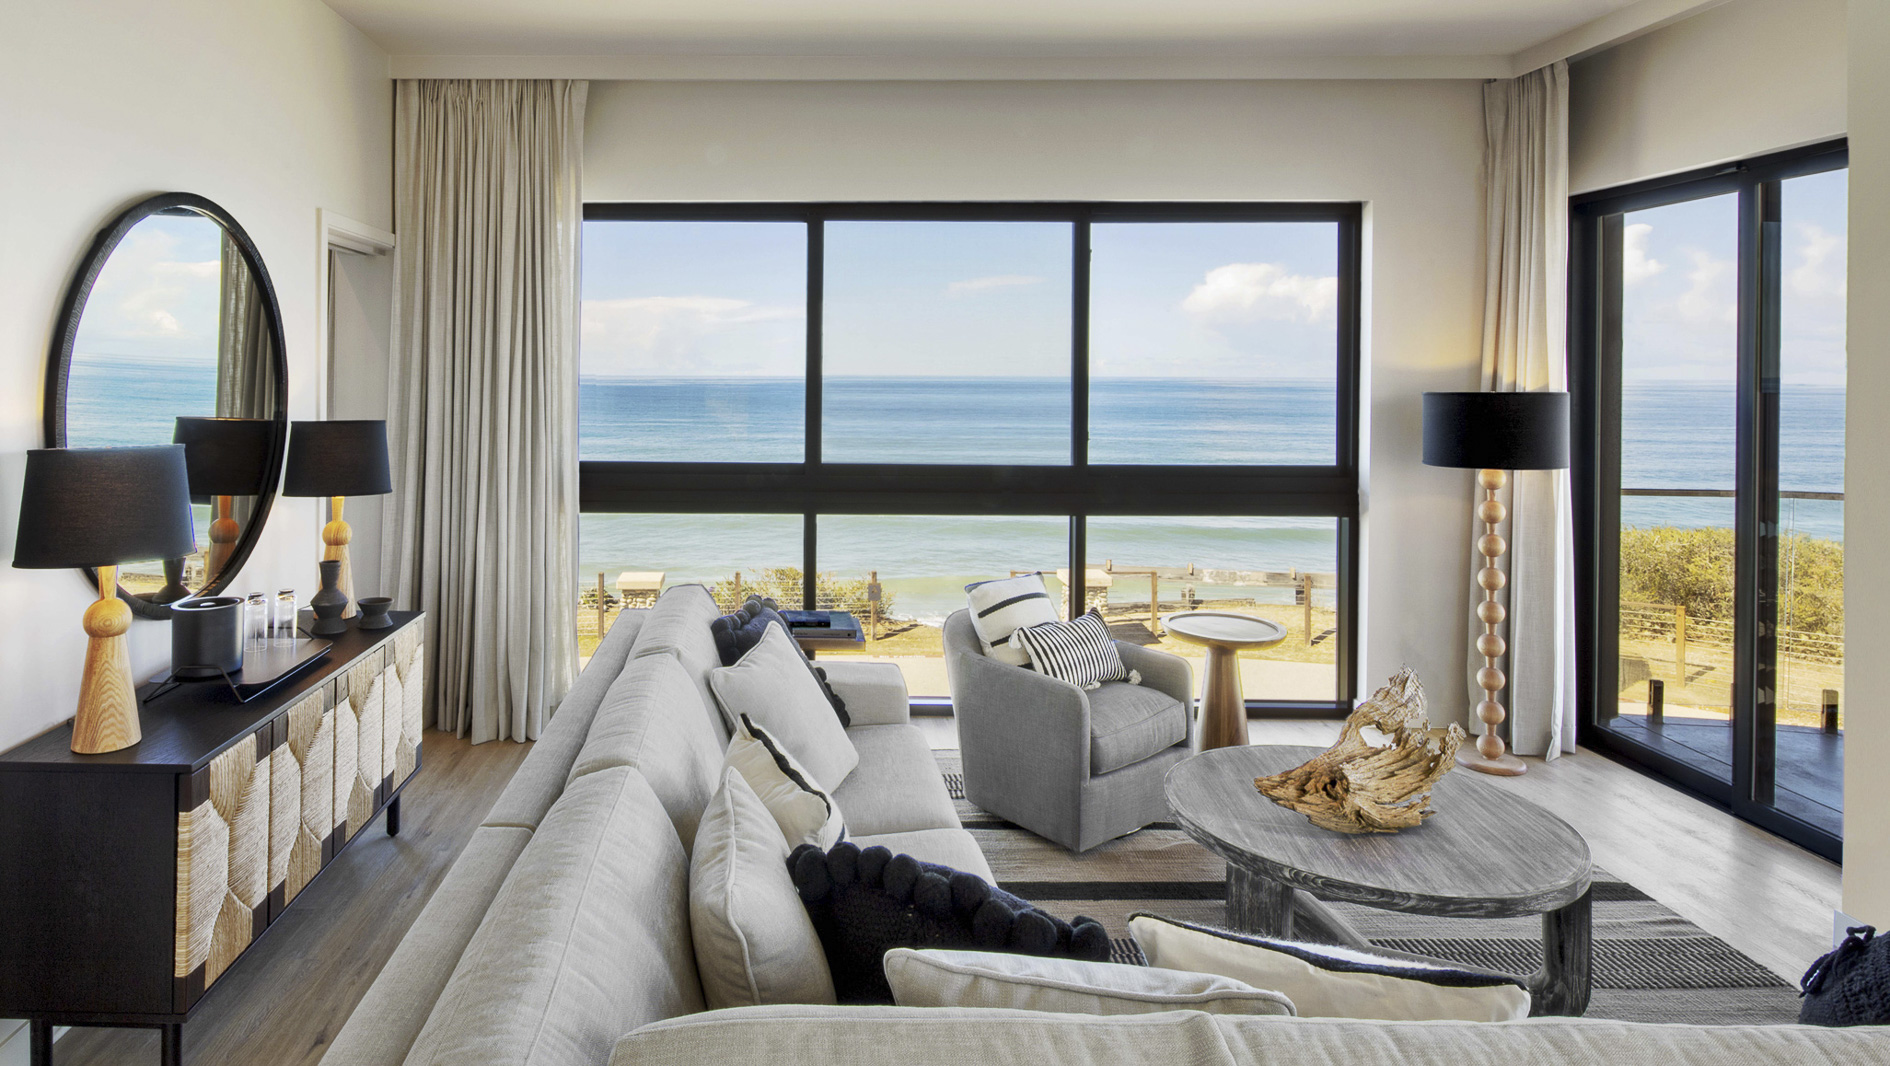 Alila Marea Beach Resort designed by Mark Zeff Design